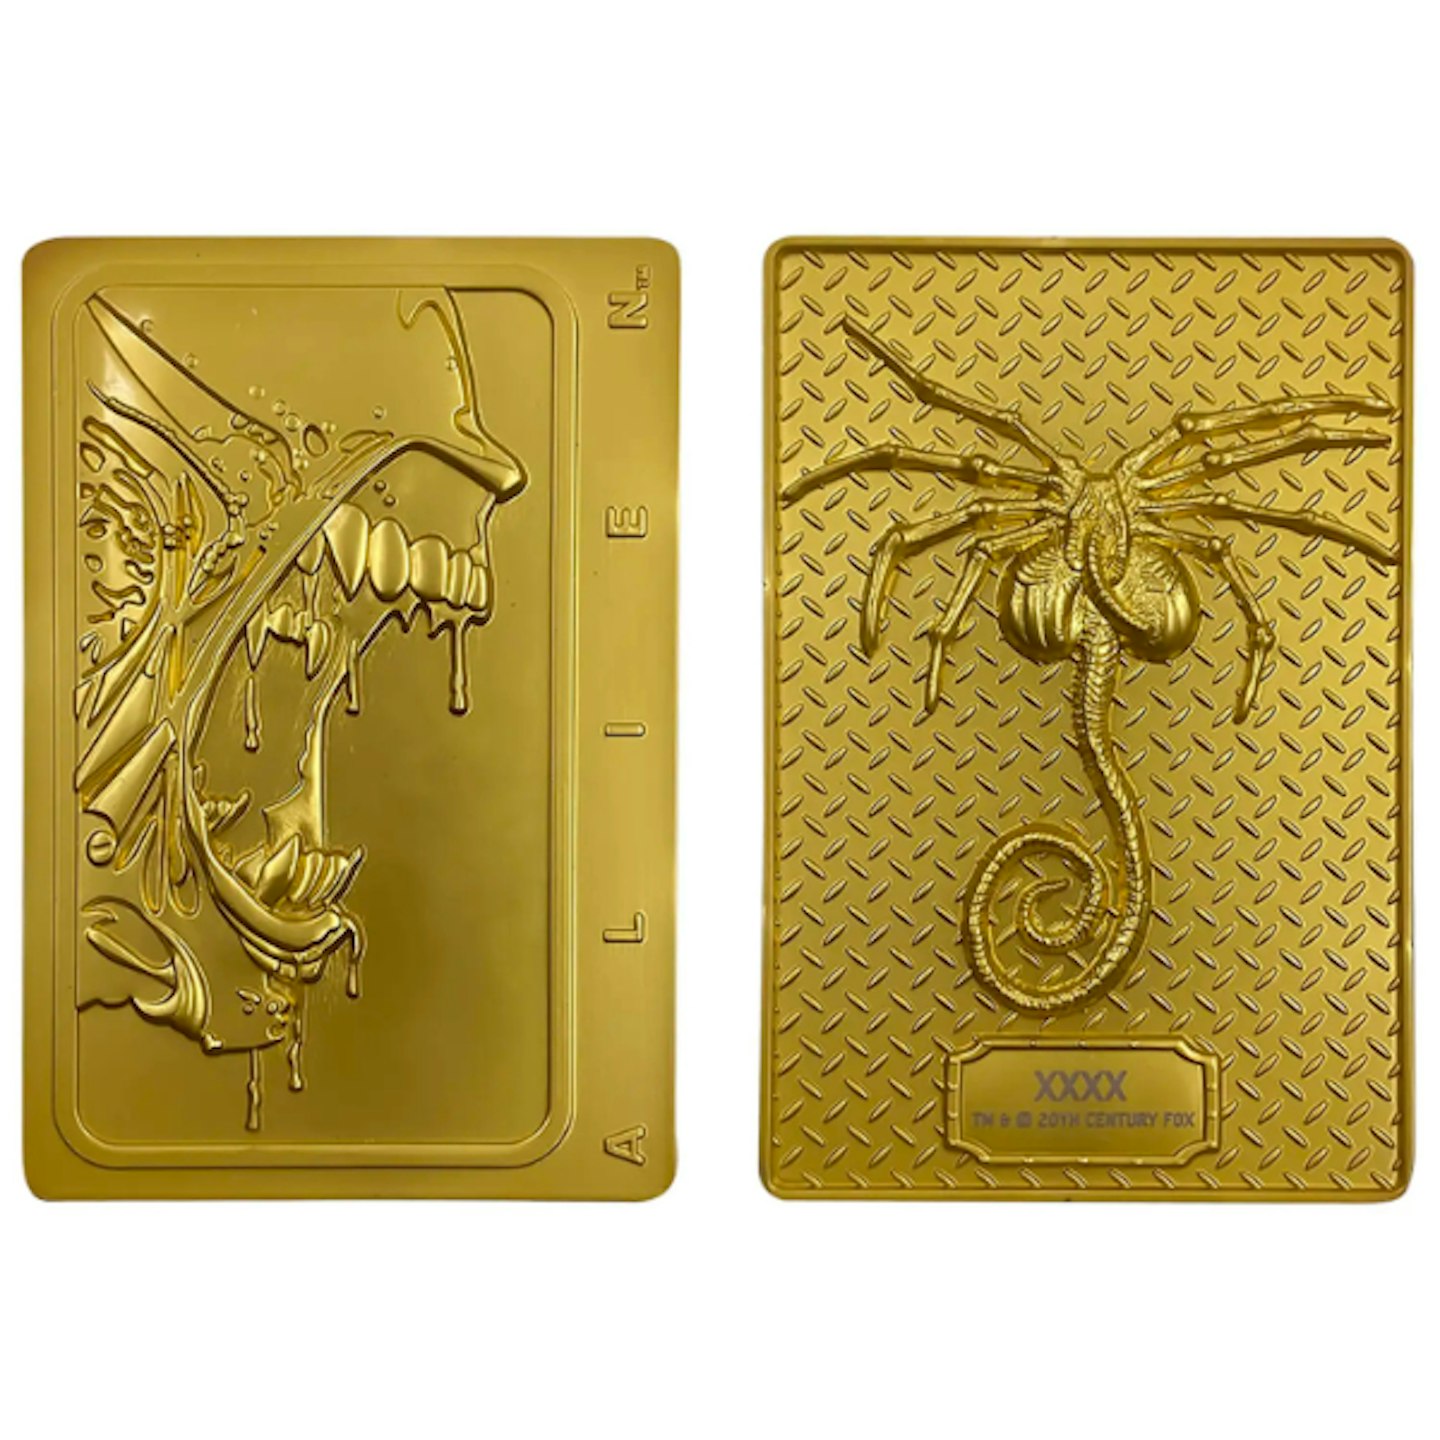 https://www.zavvi.com/merch-memorabilia/alien-24k-gold-plated-xenomorph-limited-edition-ingot-zavvi-exclusive/12721068.html